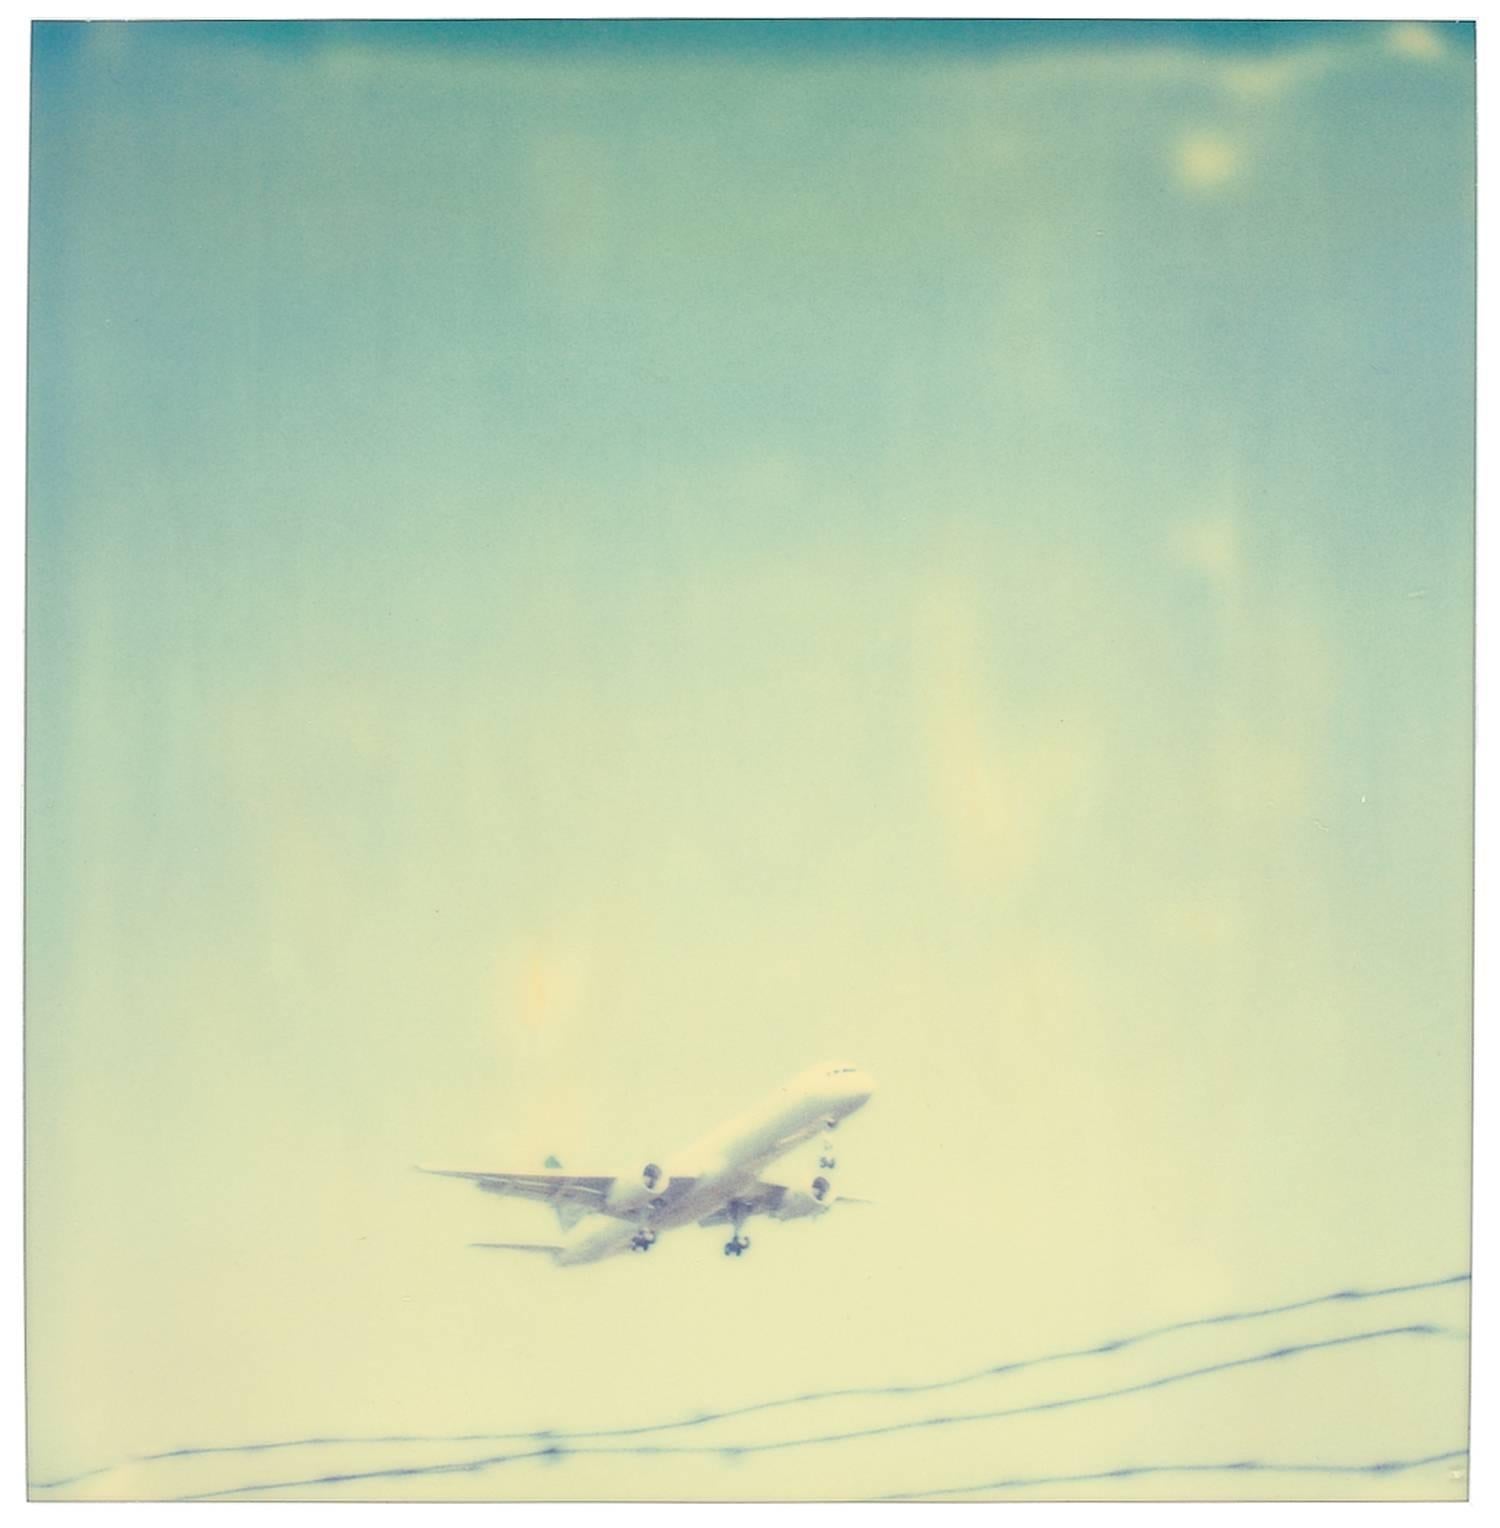 Leaving in a jet plane (29 Palms, CA) - diptych - Photograph by Stefanie Schneider